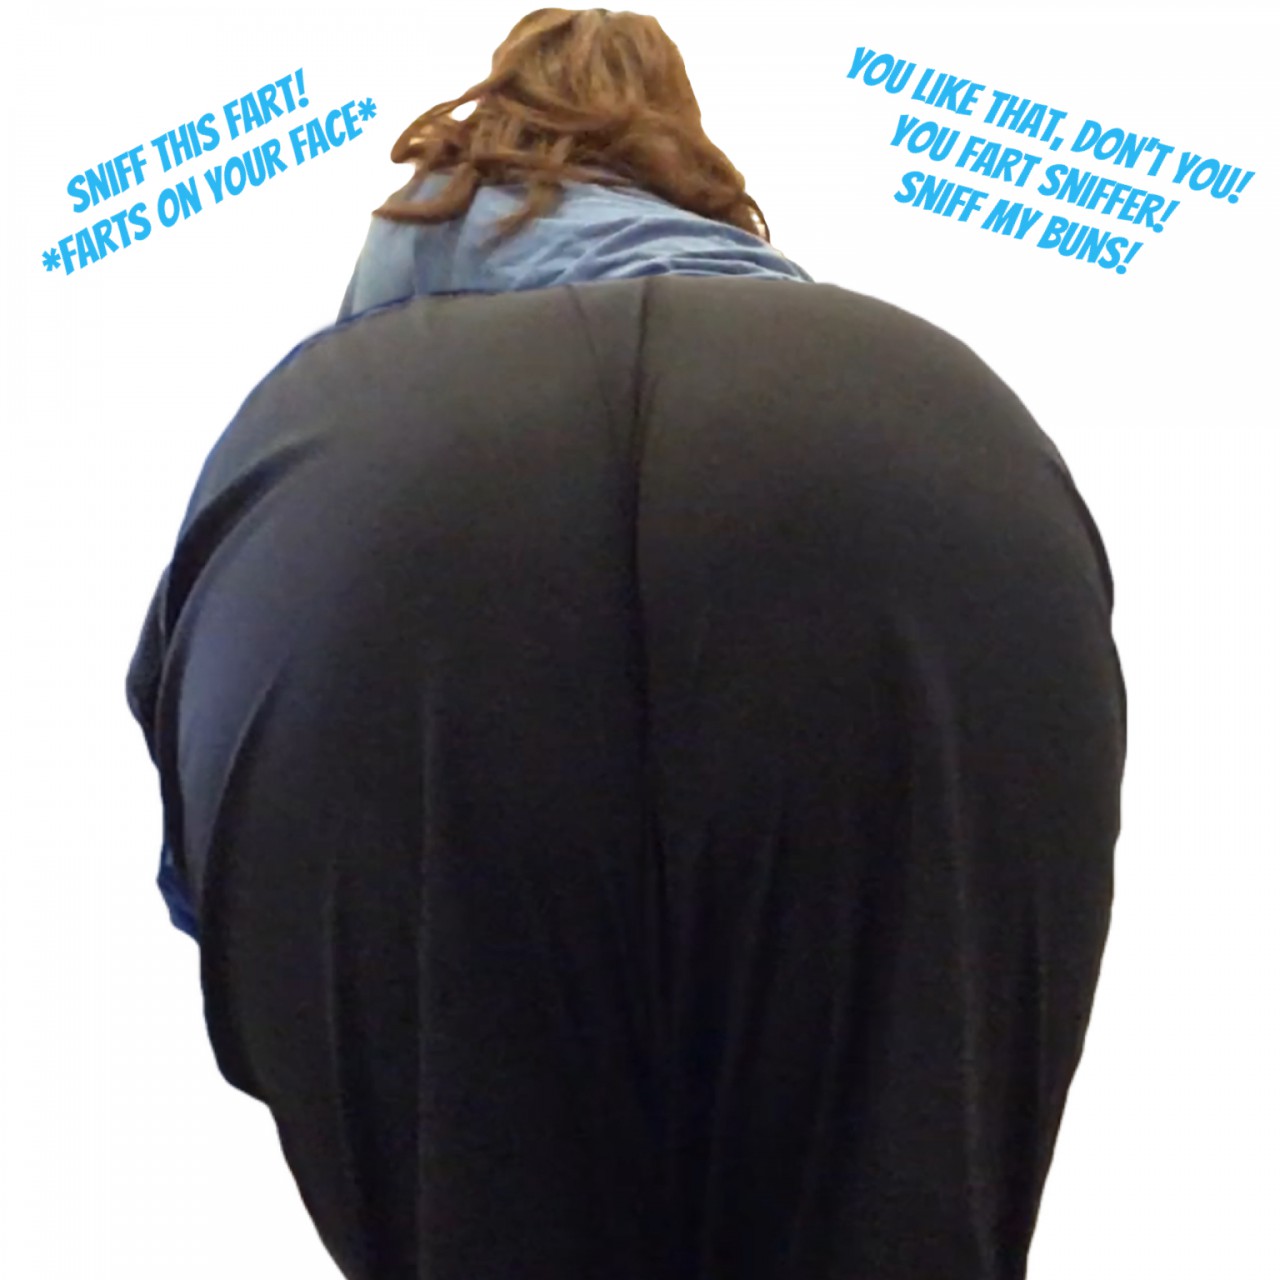 Oh So Cynthia: Meet Subtle Butt, the Fart-Neutralizing Underwear